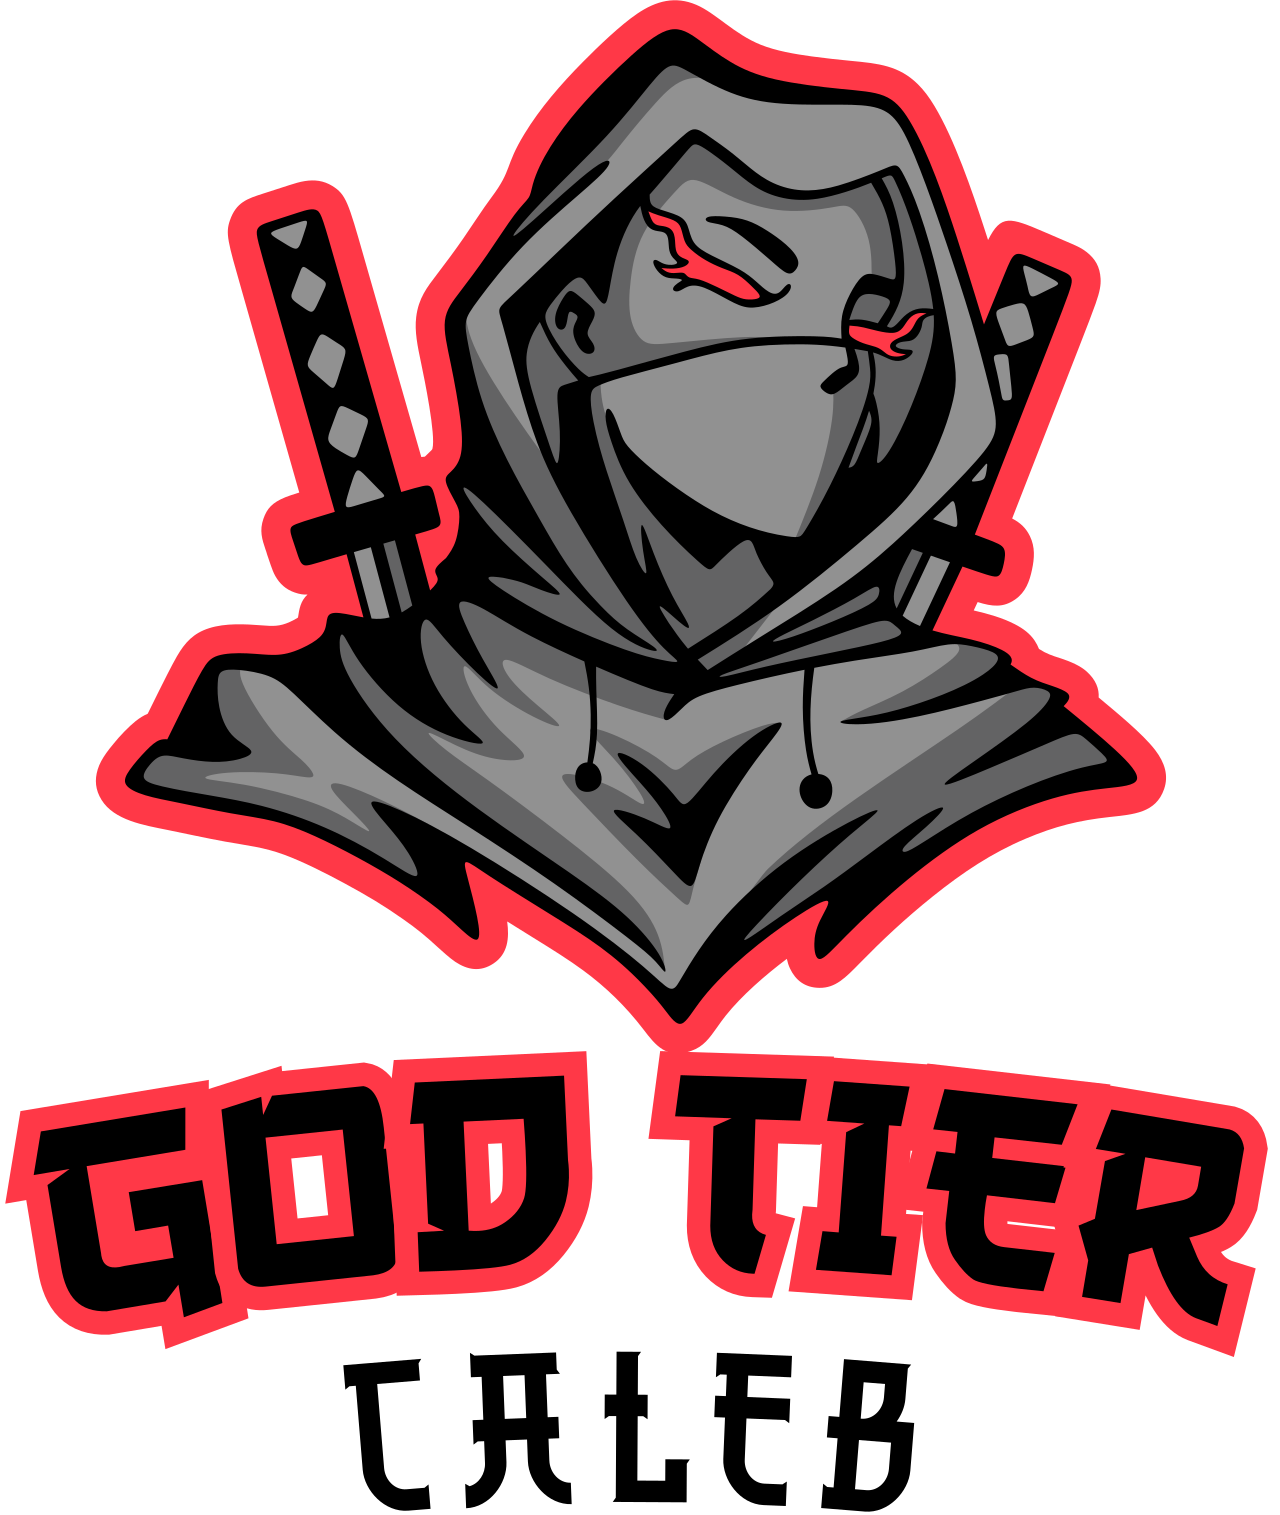 GOD TIER's logo